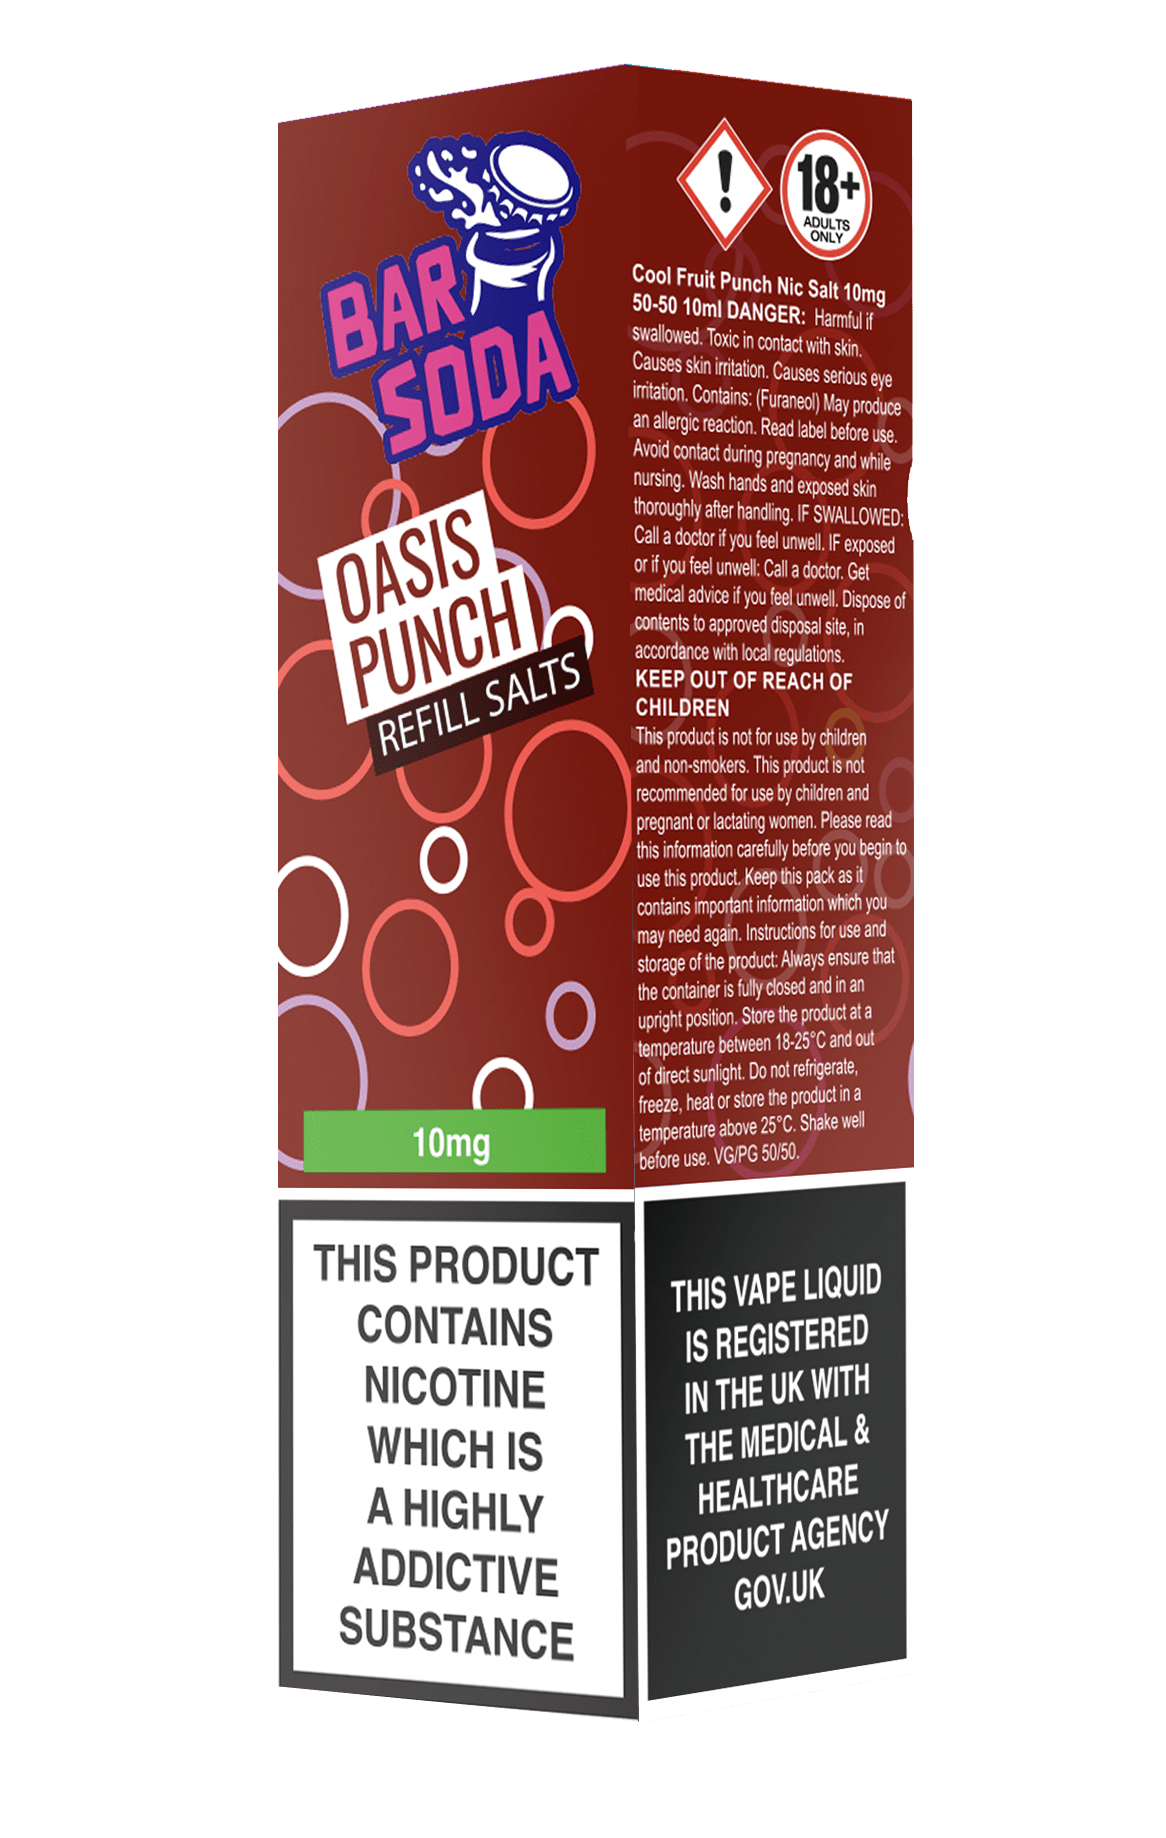 Bar Soda Nicotine Salts - Oasis Punch